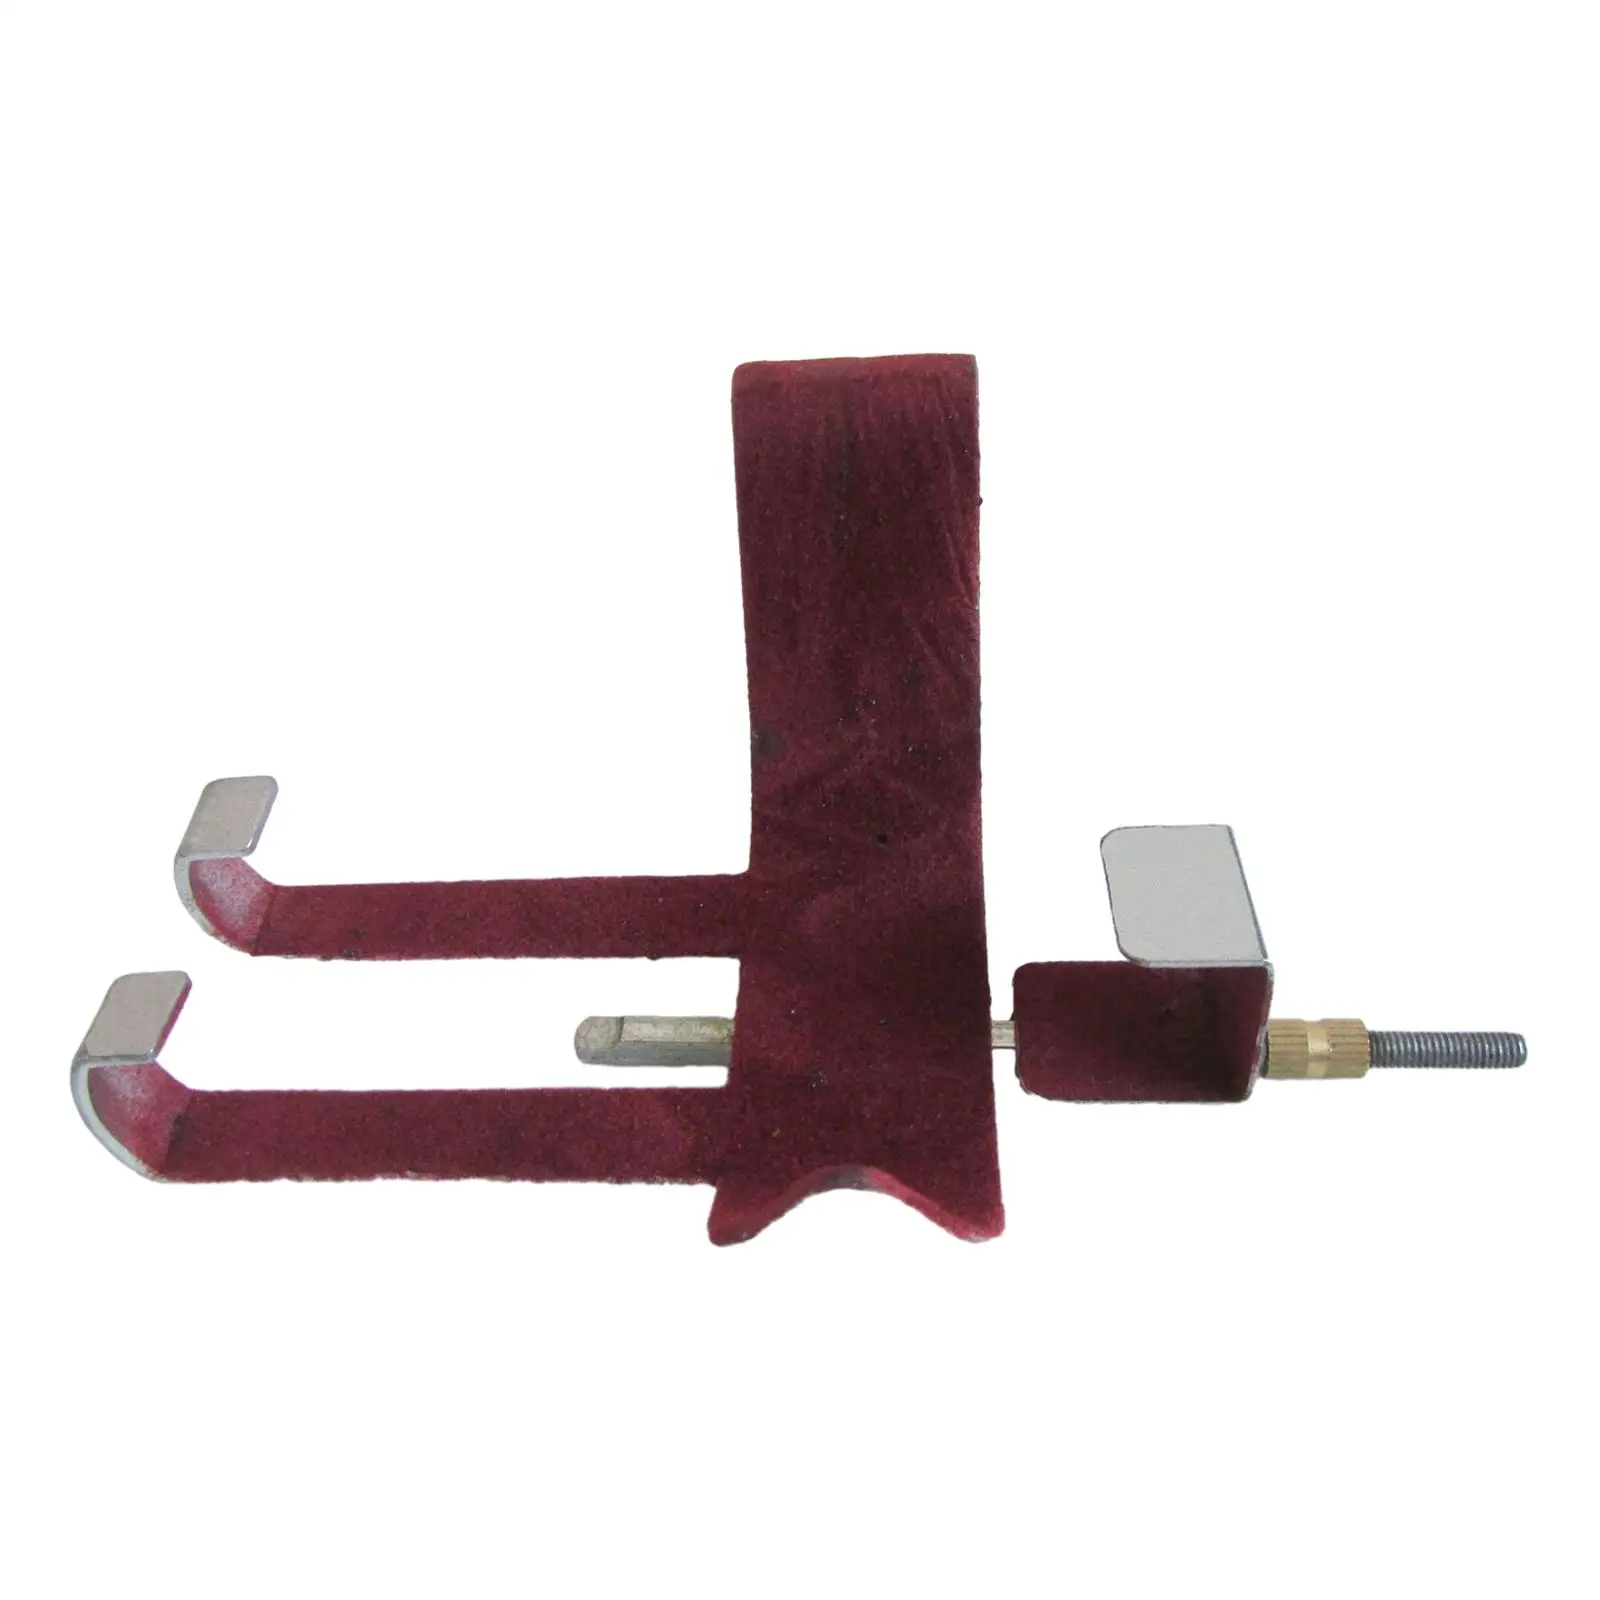 Erhu Waist Rack Comfortable Adjustable Professional Easy to Use Erhu Holder Musical Instrument Frame Accessories for Practice